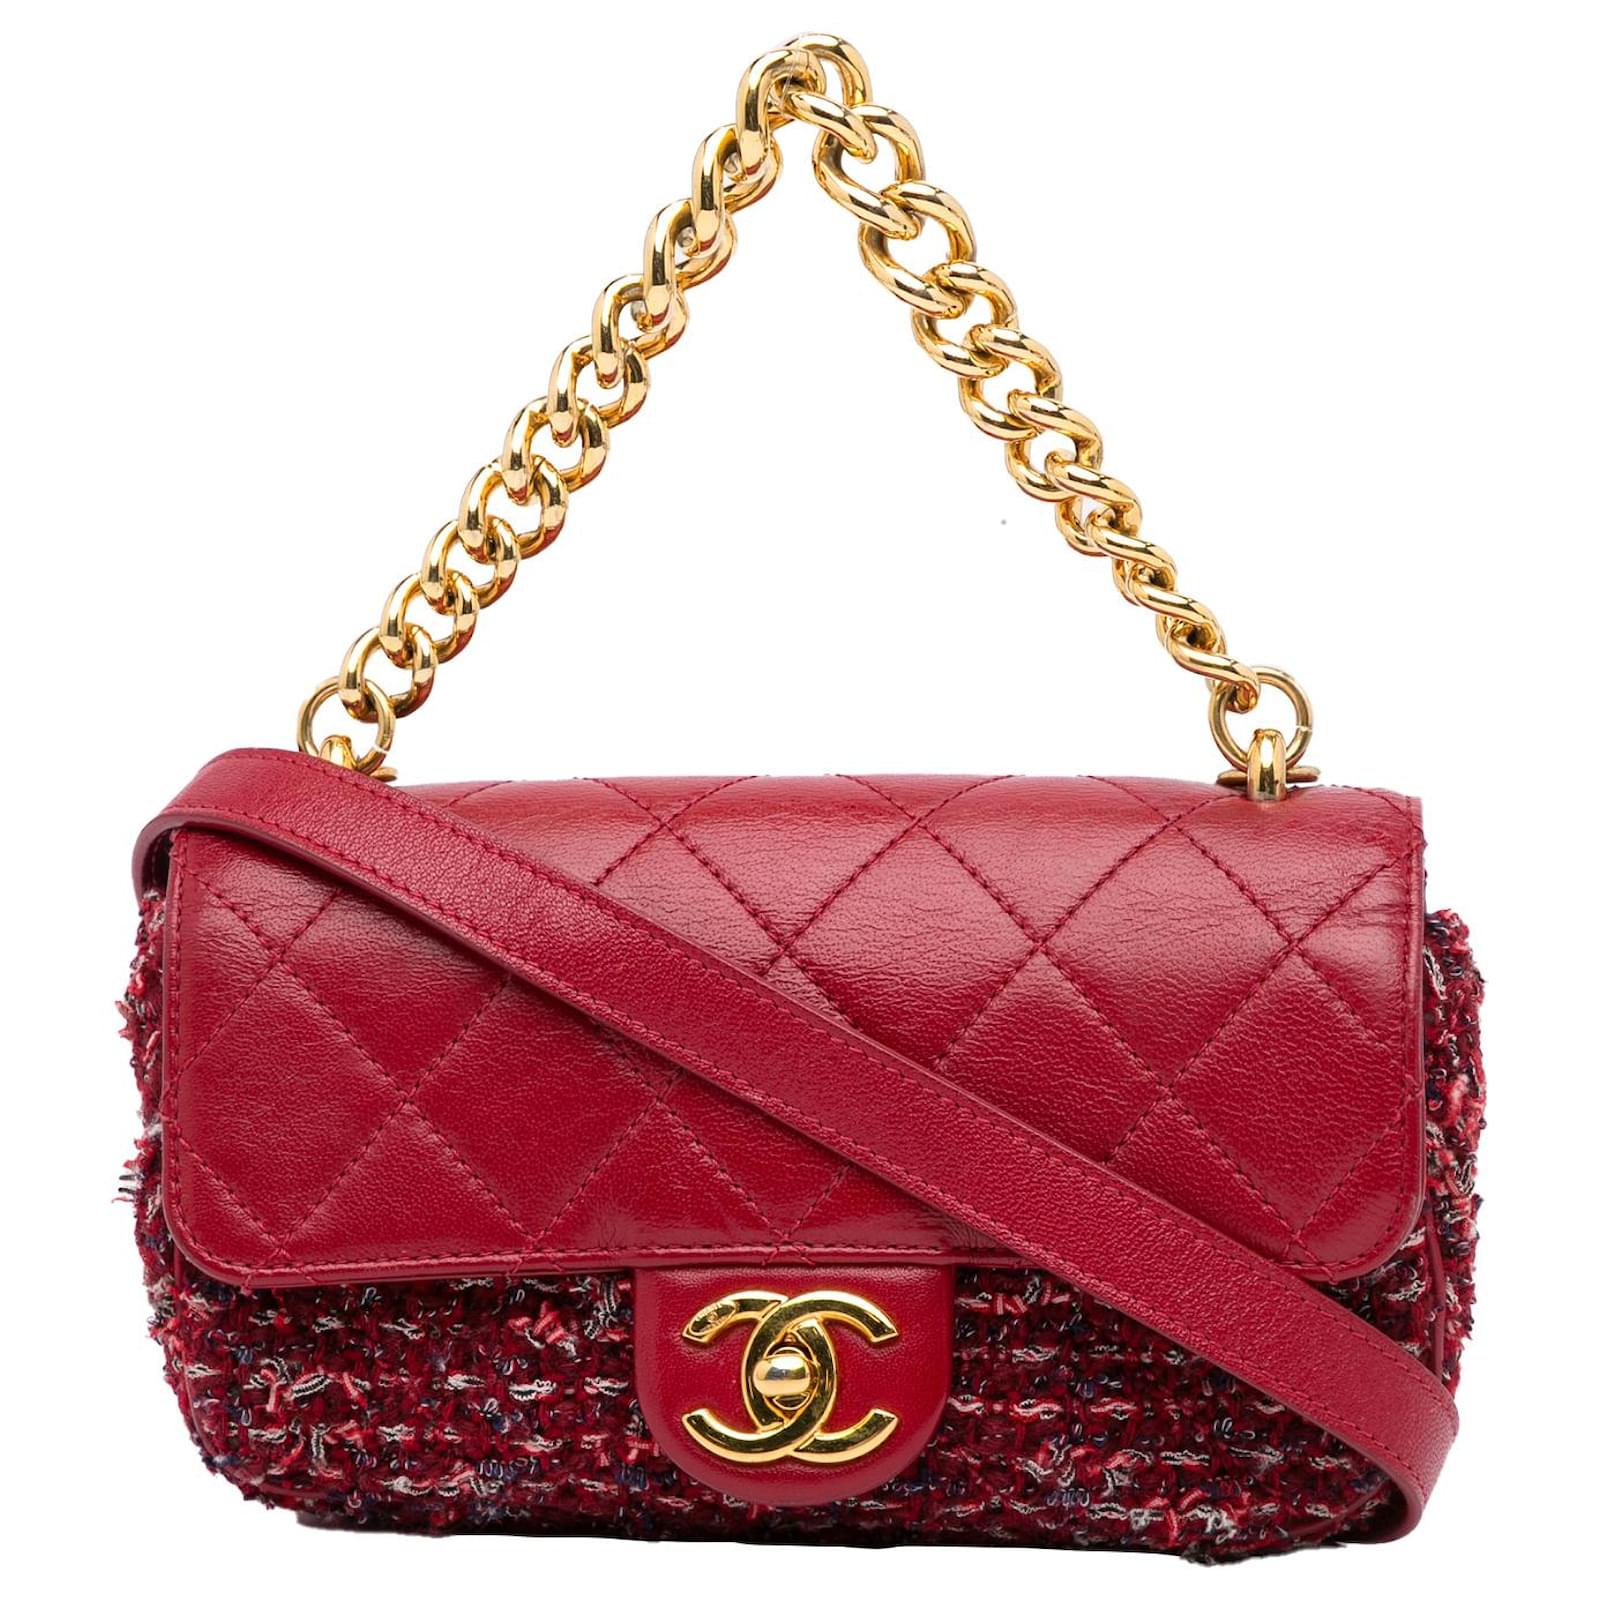 Chanel Red Tweed Flap Bag - '20s